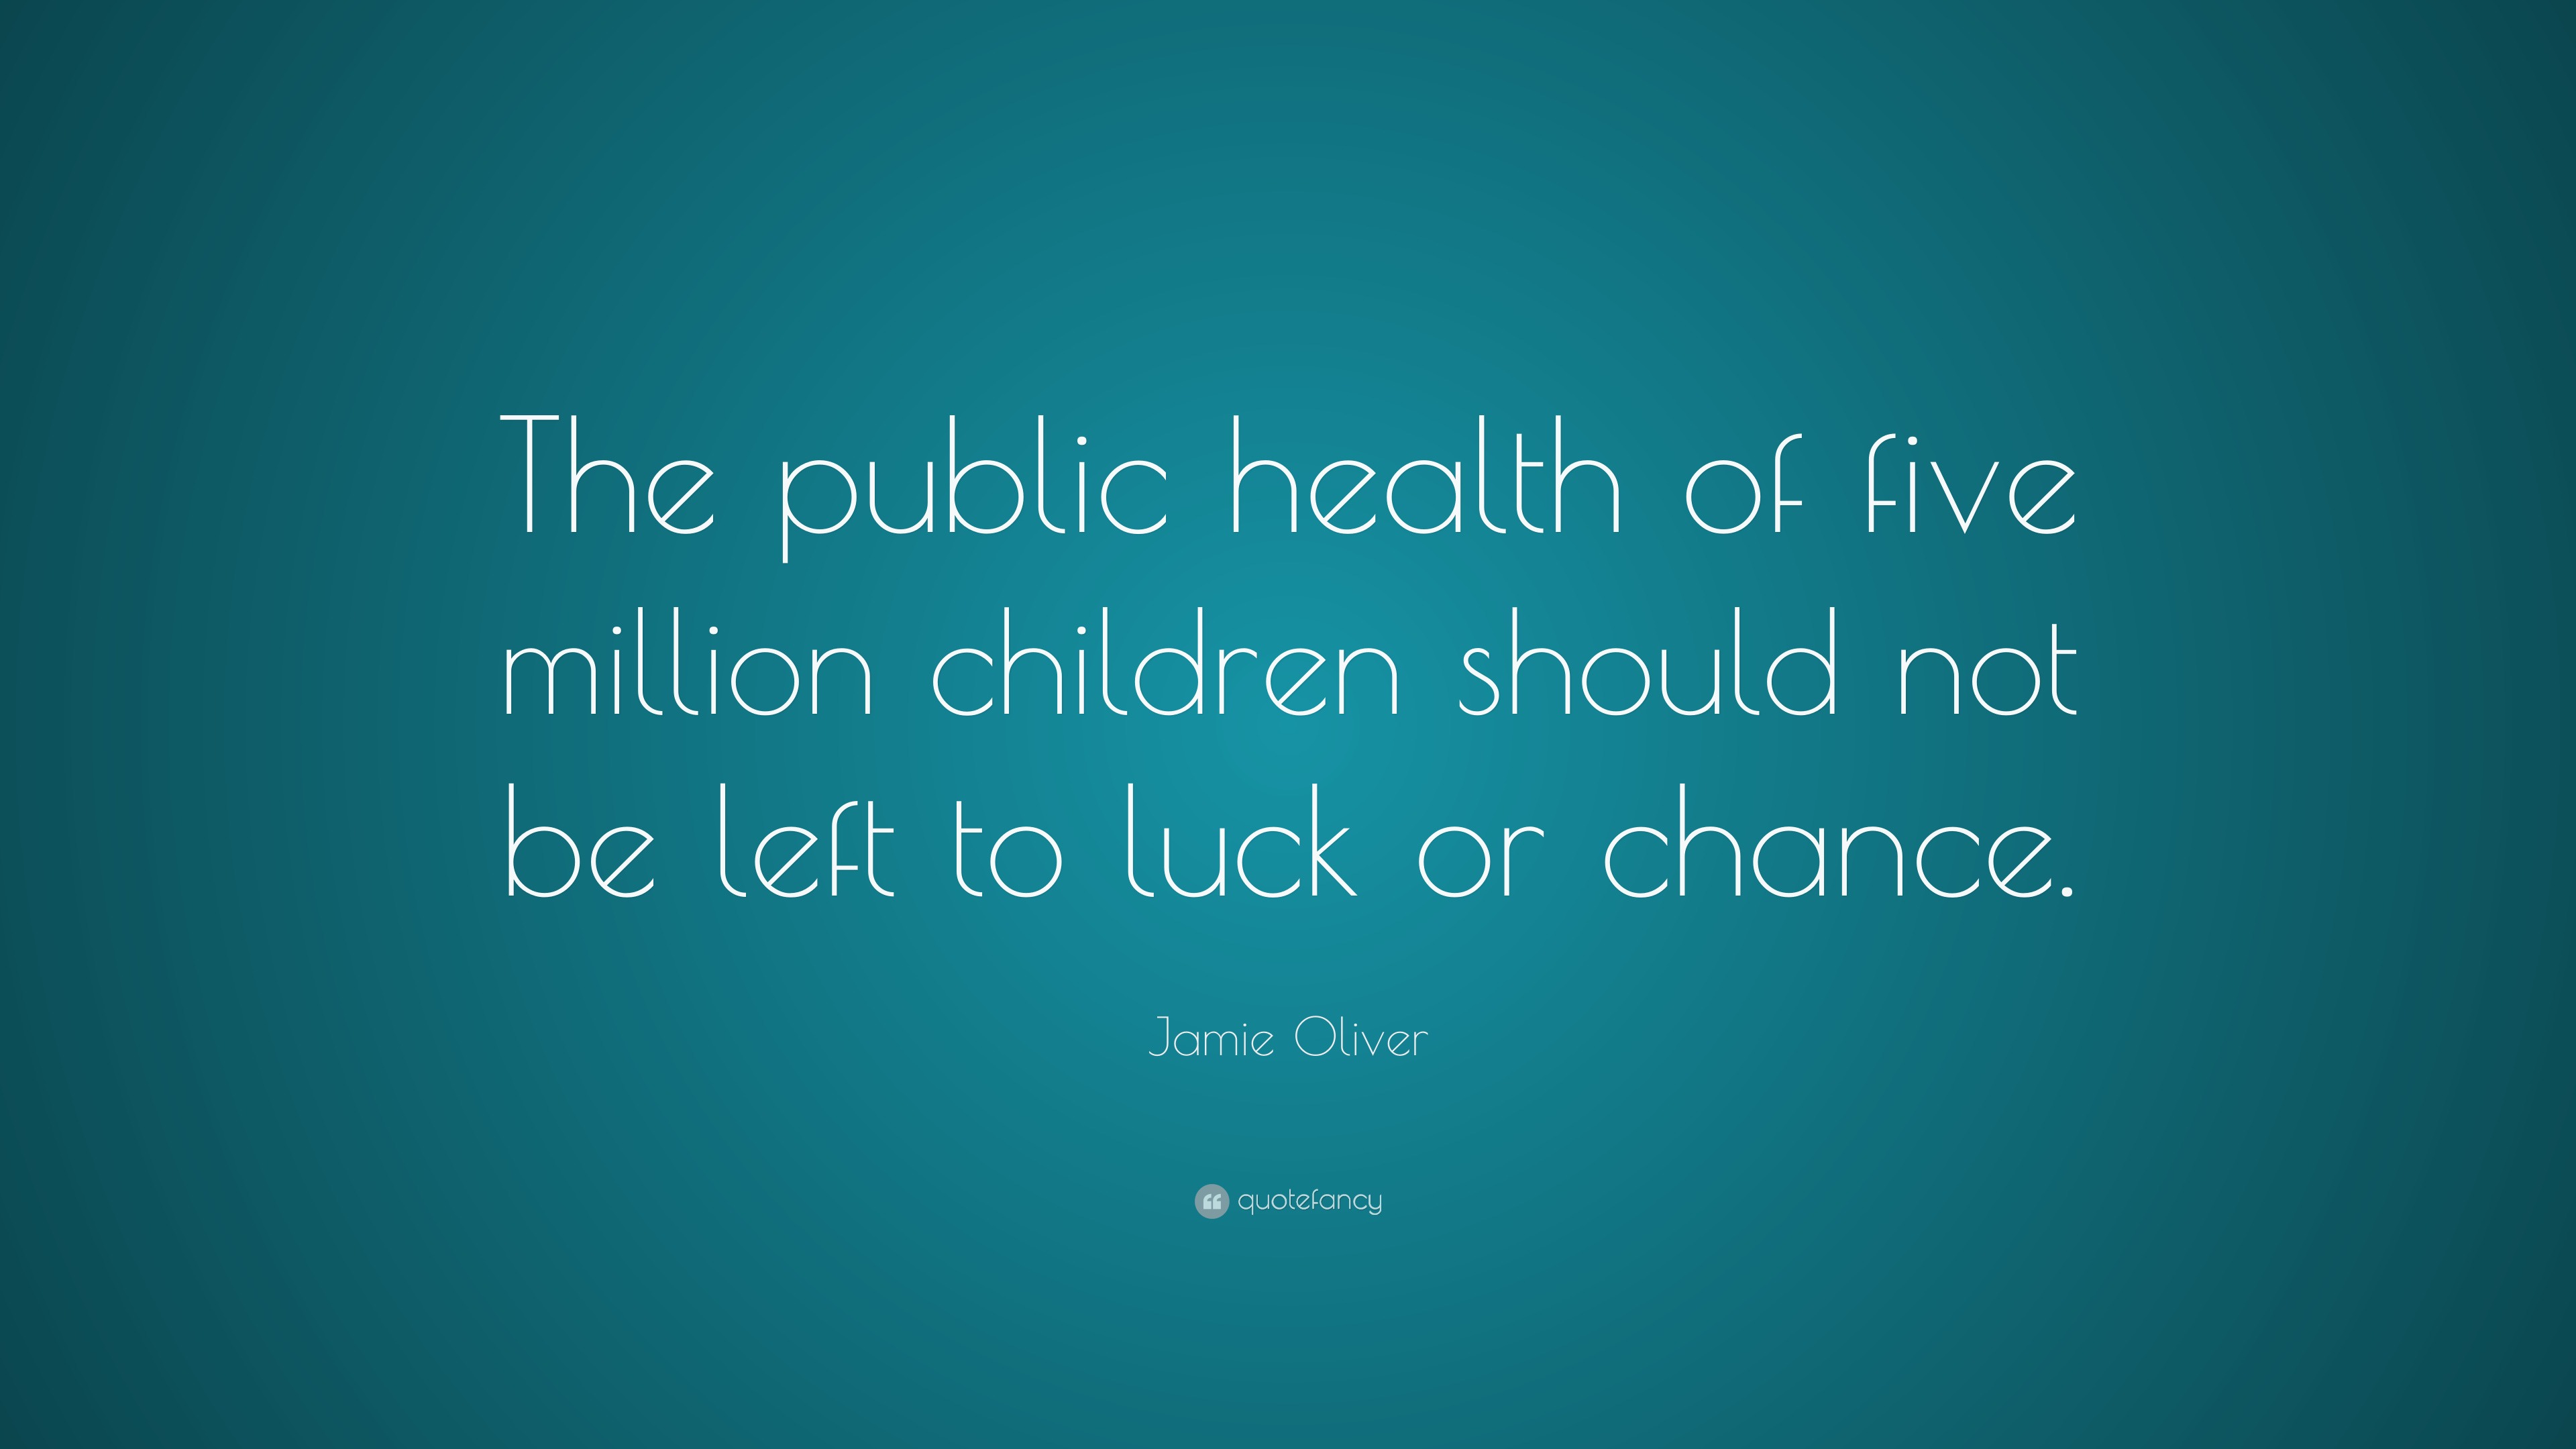 Jamie Oliver Quote: “The public health of five million children